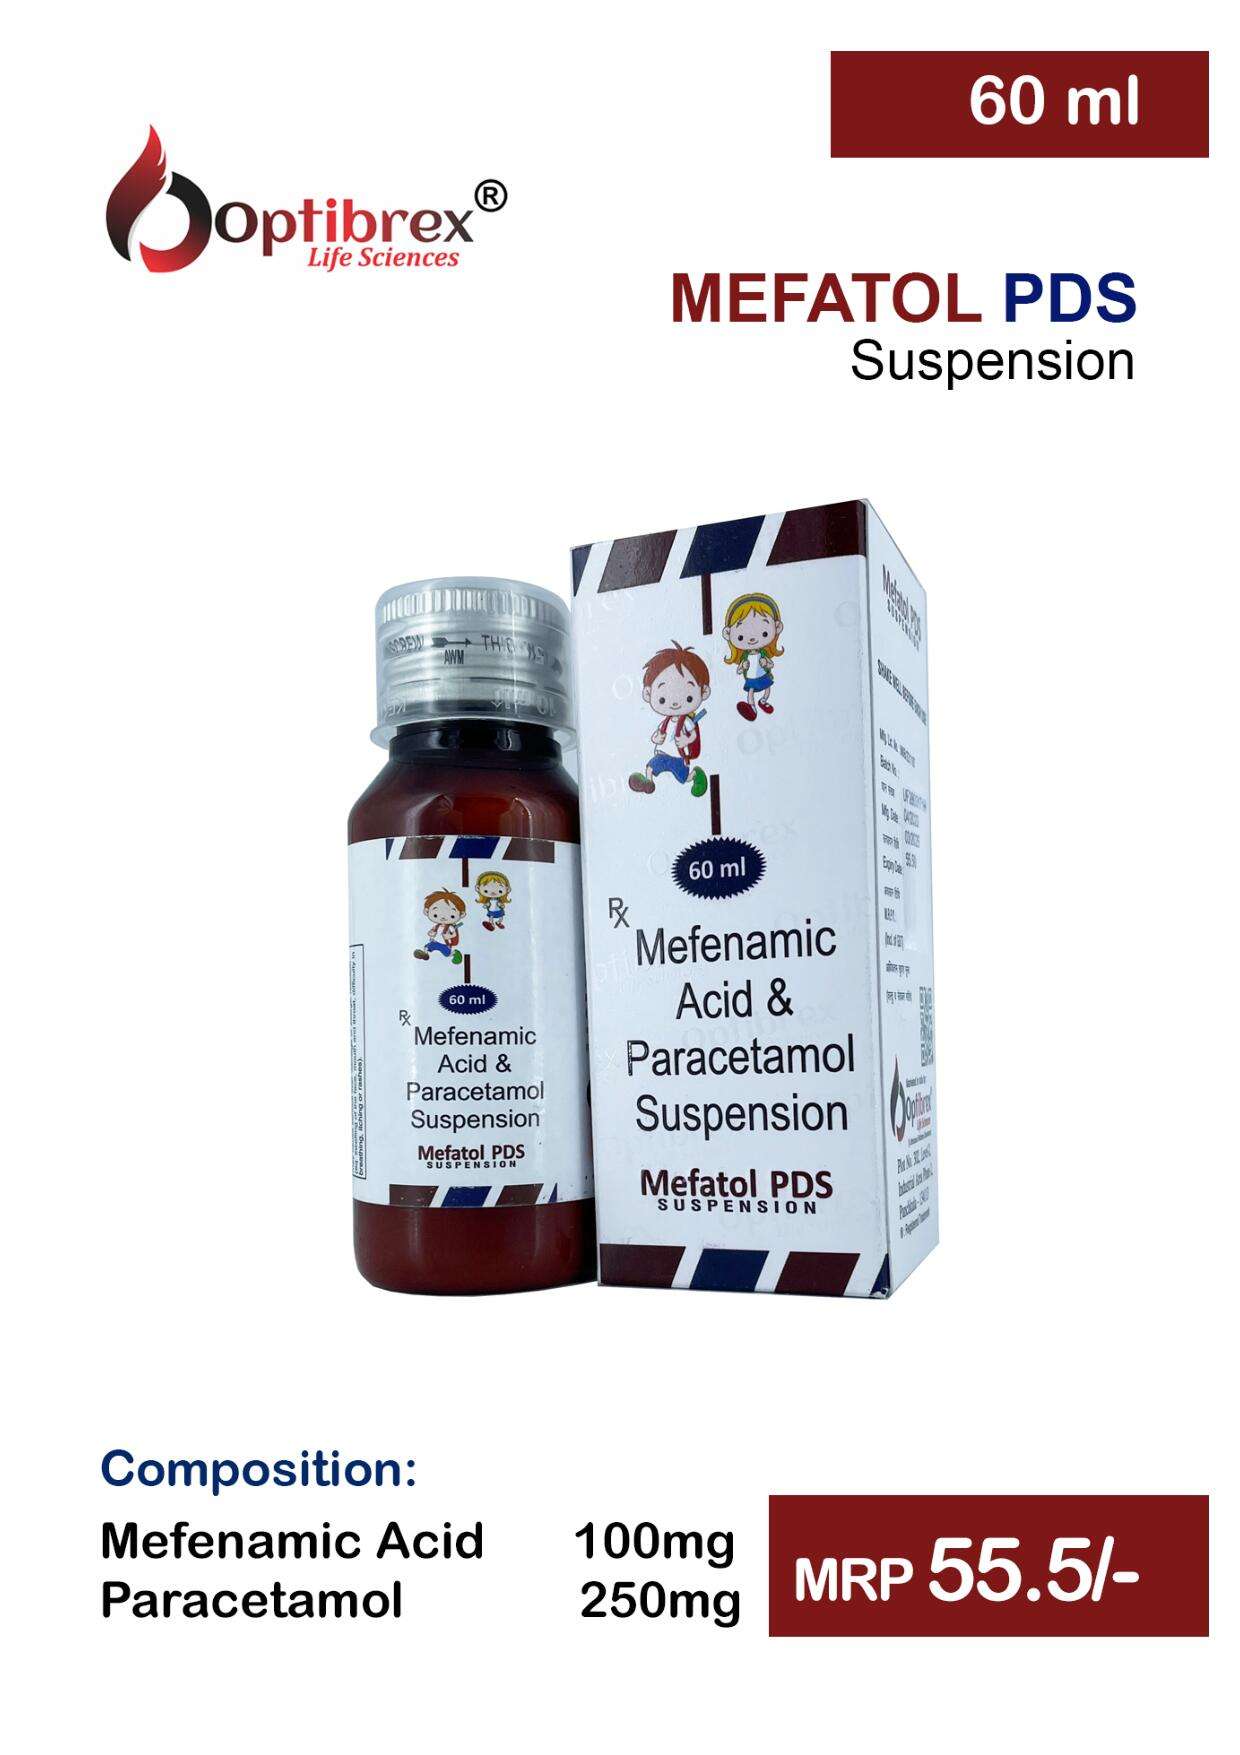 mefenamic acid 100mg. + paracetamol 250mg